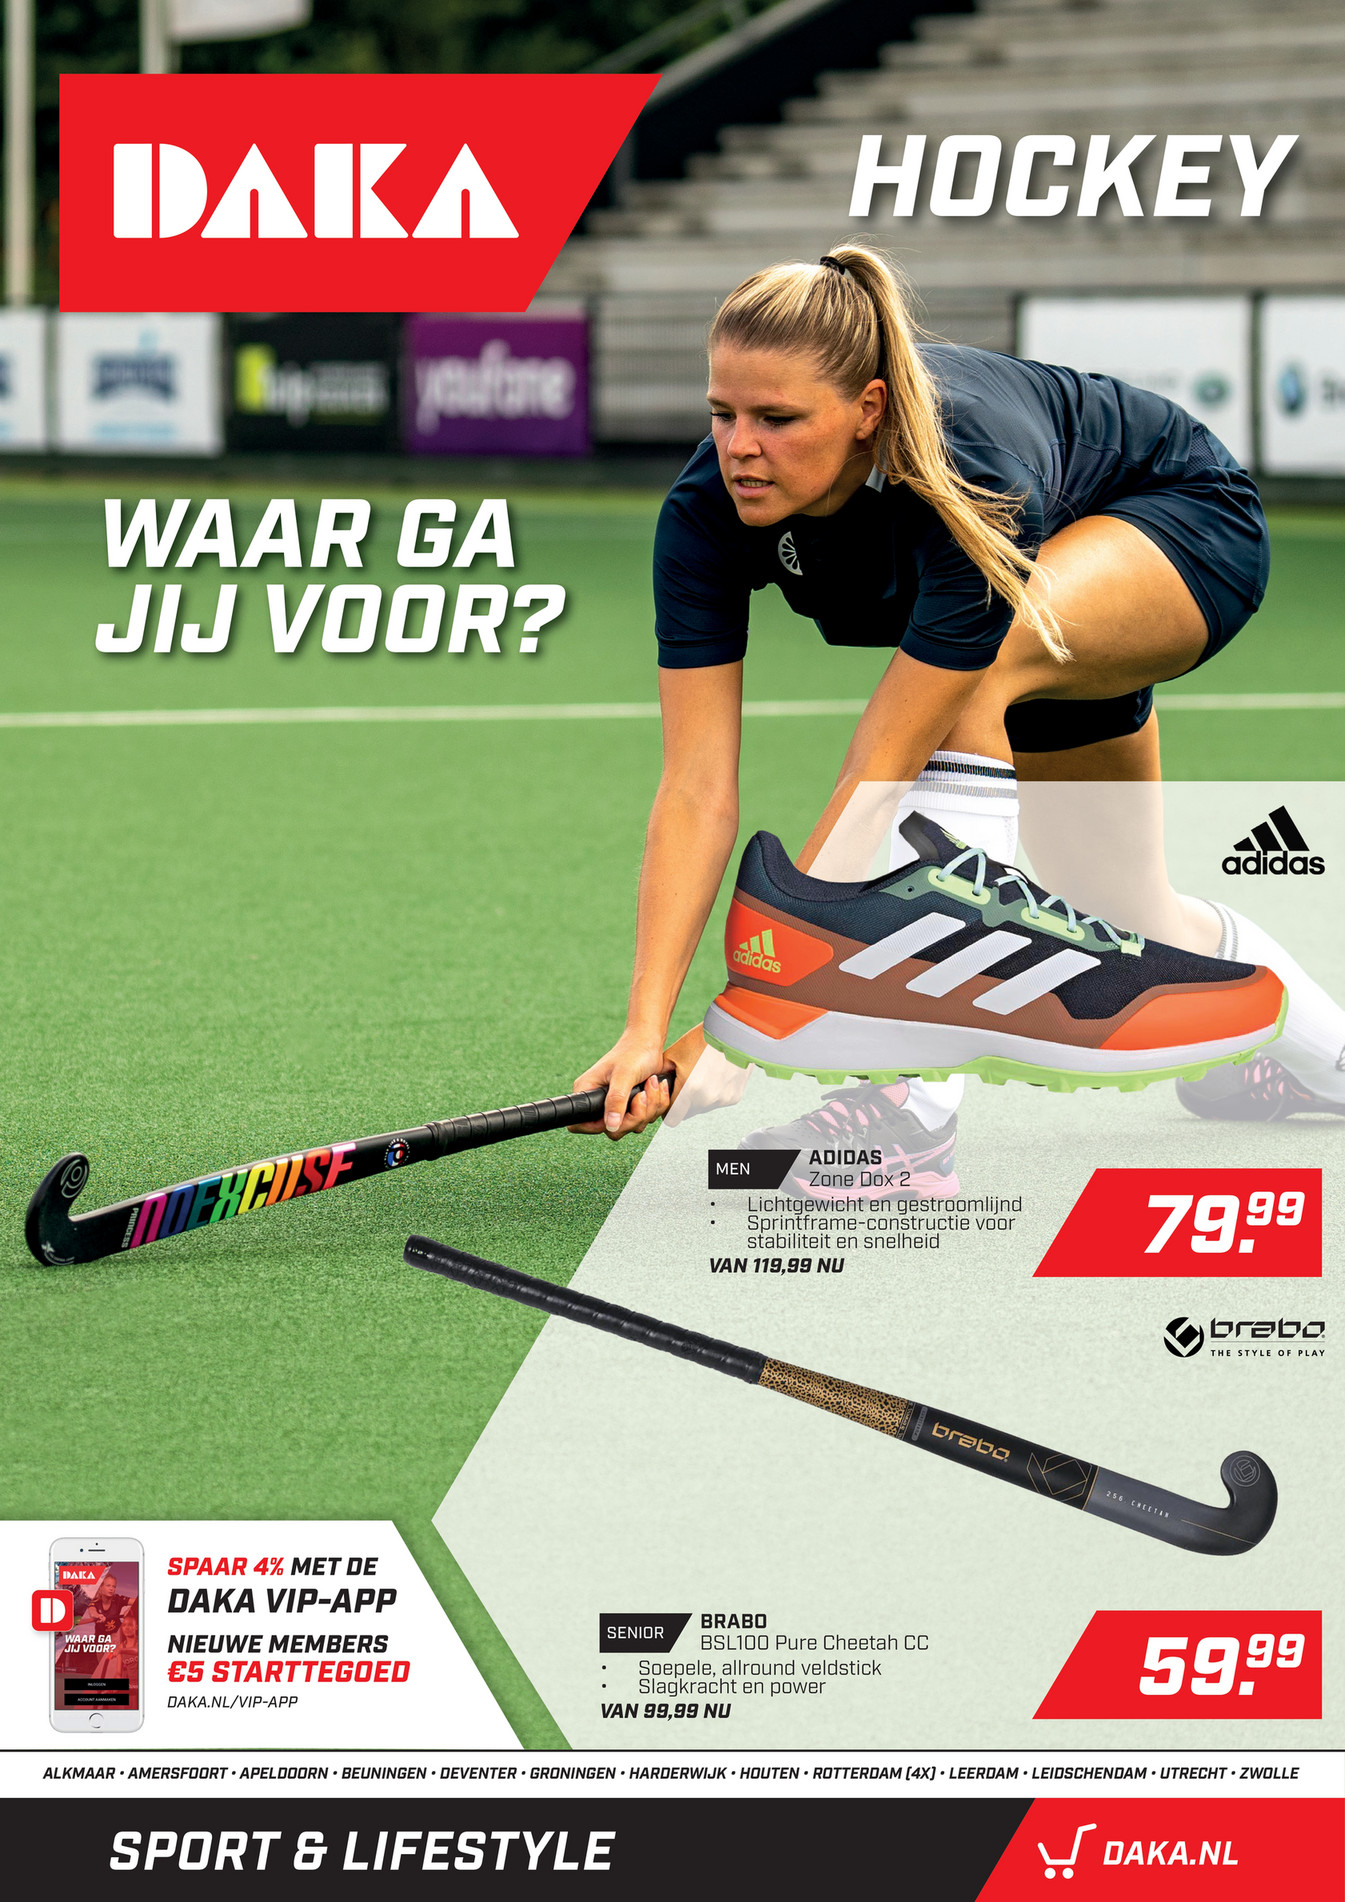 Daka Sport - DAKA_Hockey-folder-A4-DEF - Pagina 1 - Created with ...